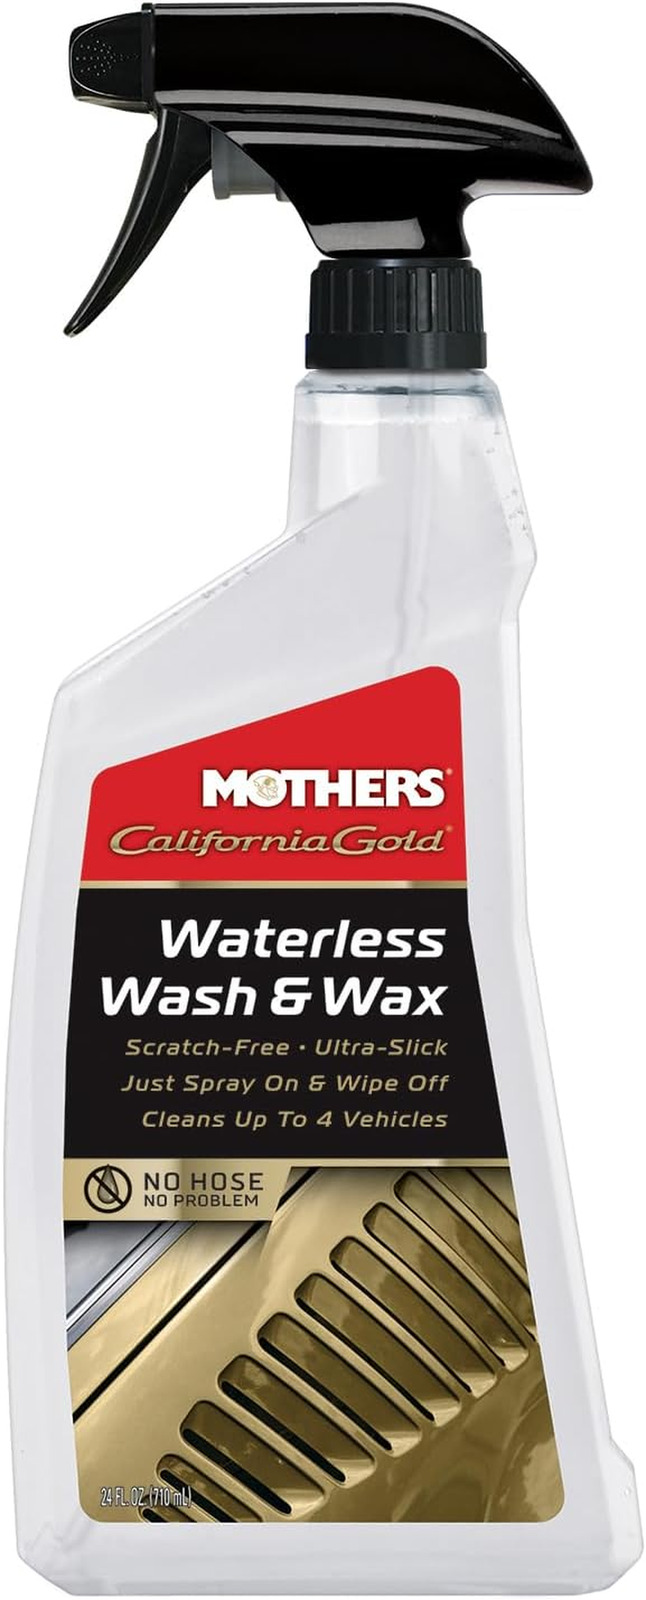 05644 California Gold Waterless Wash and Wax, 24 fl. oz.